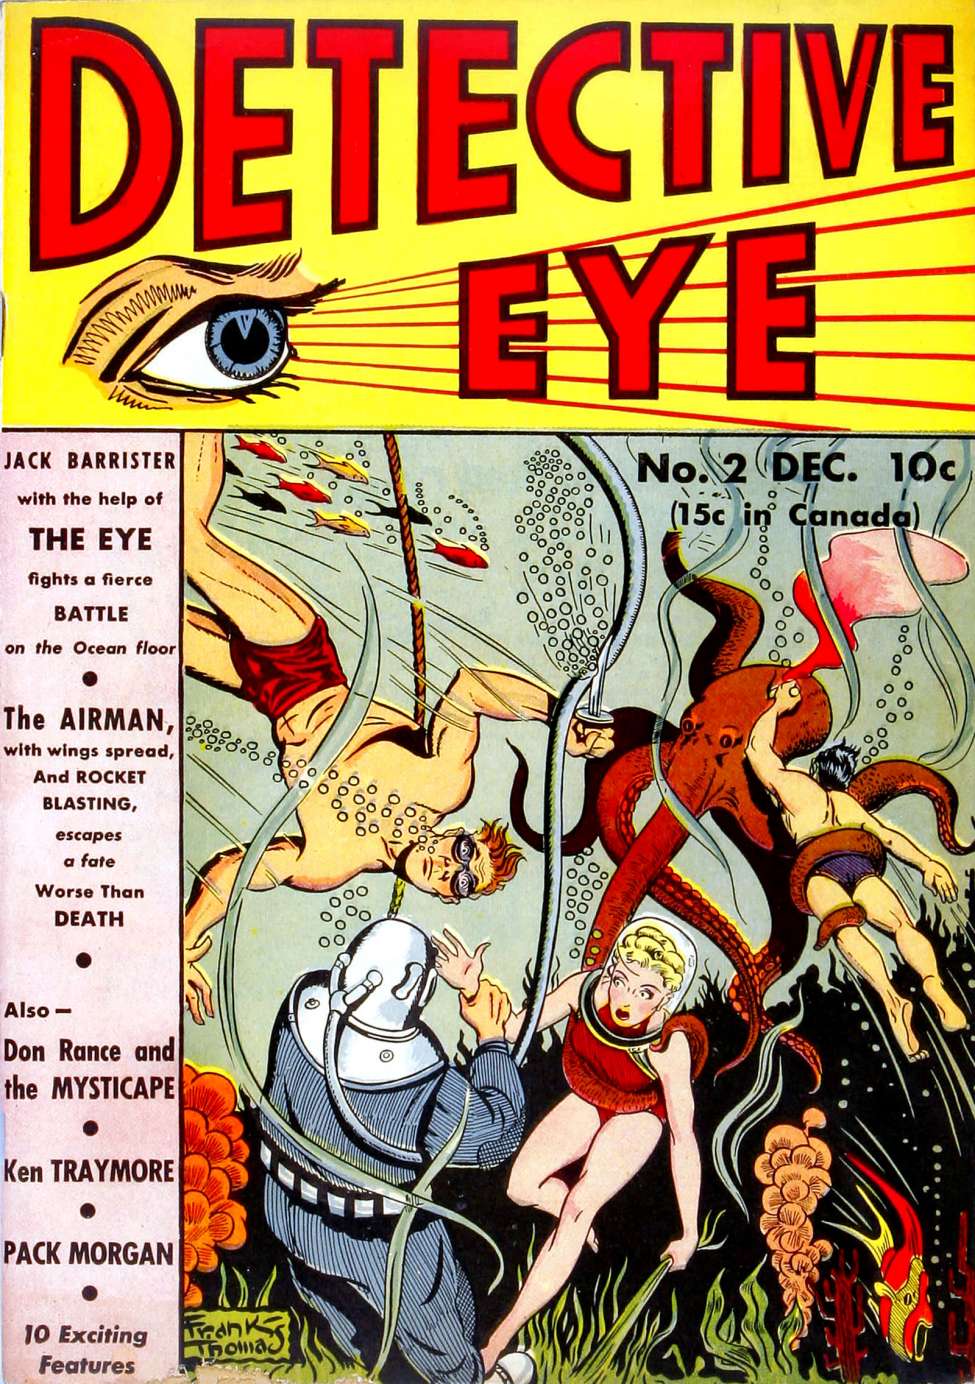 Detective Eye #2 by Centaur